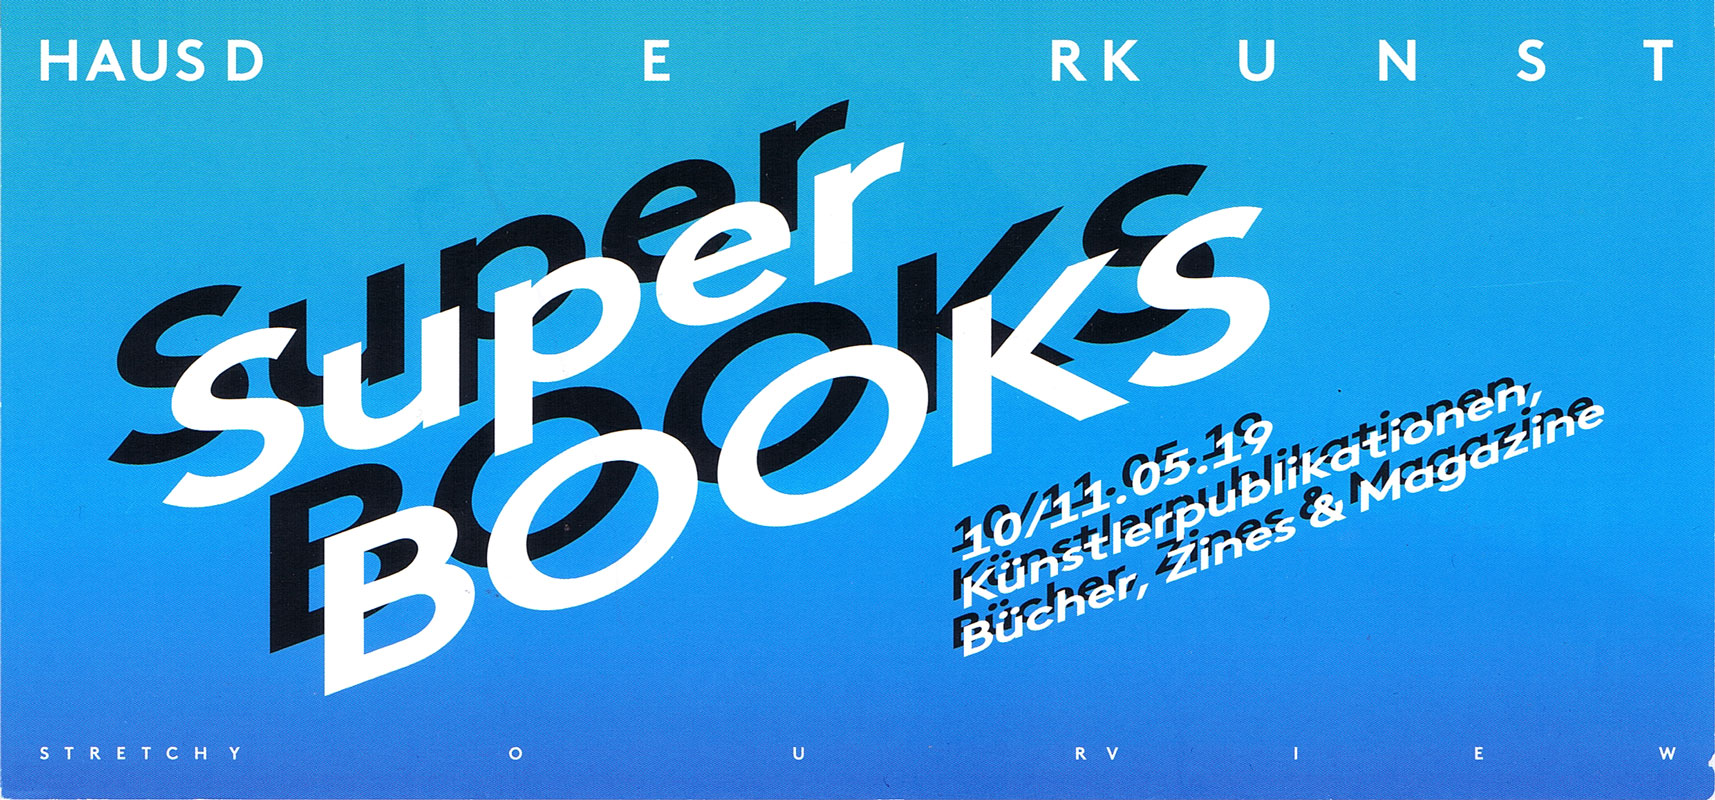 hdk-super-books-2019-pk